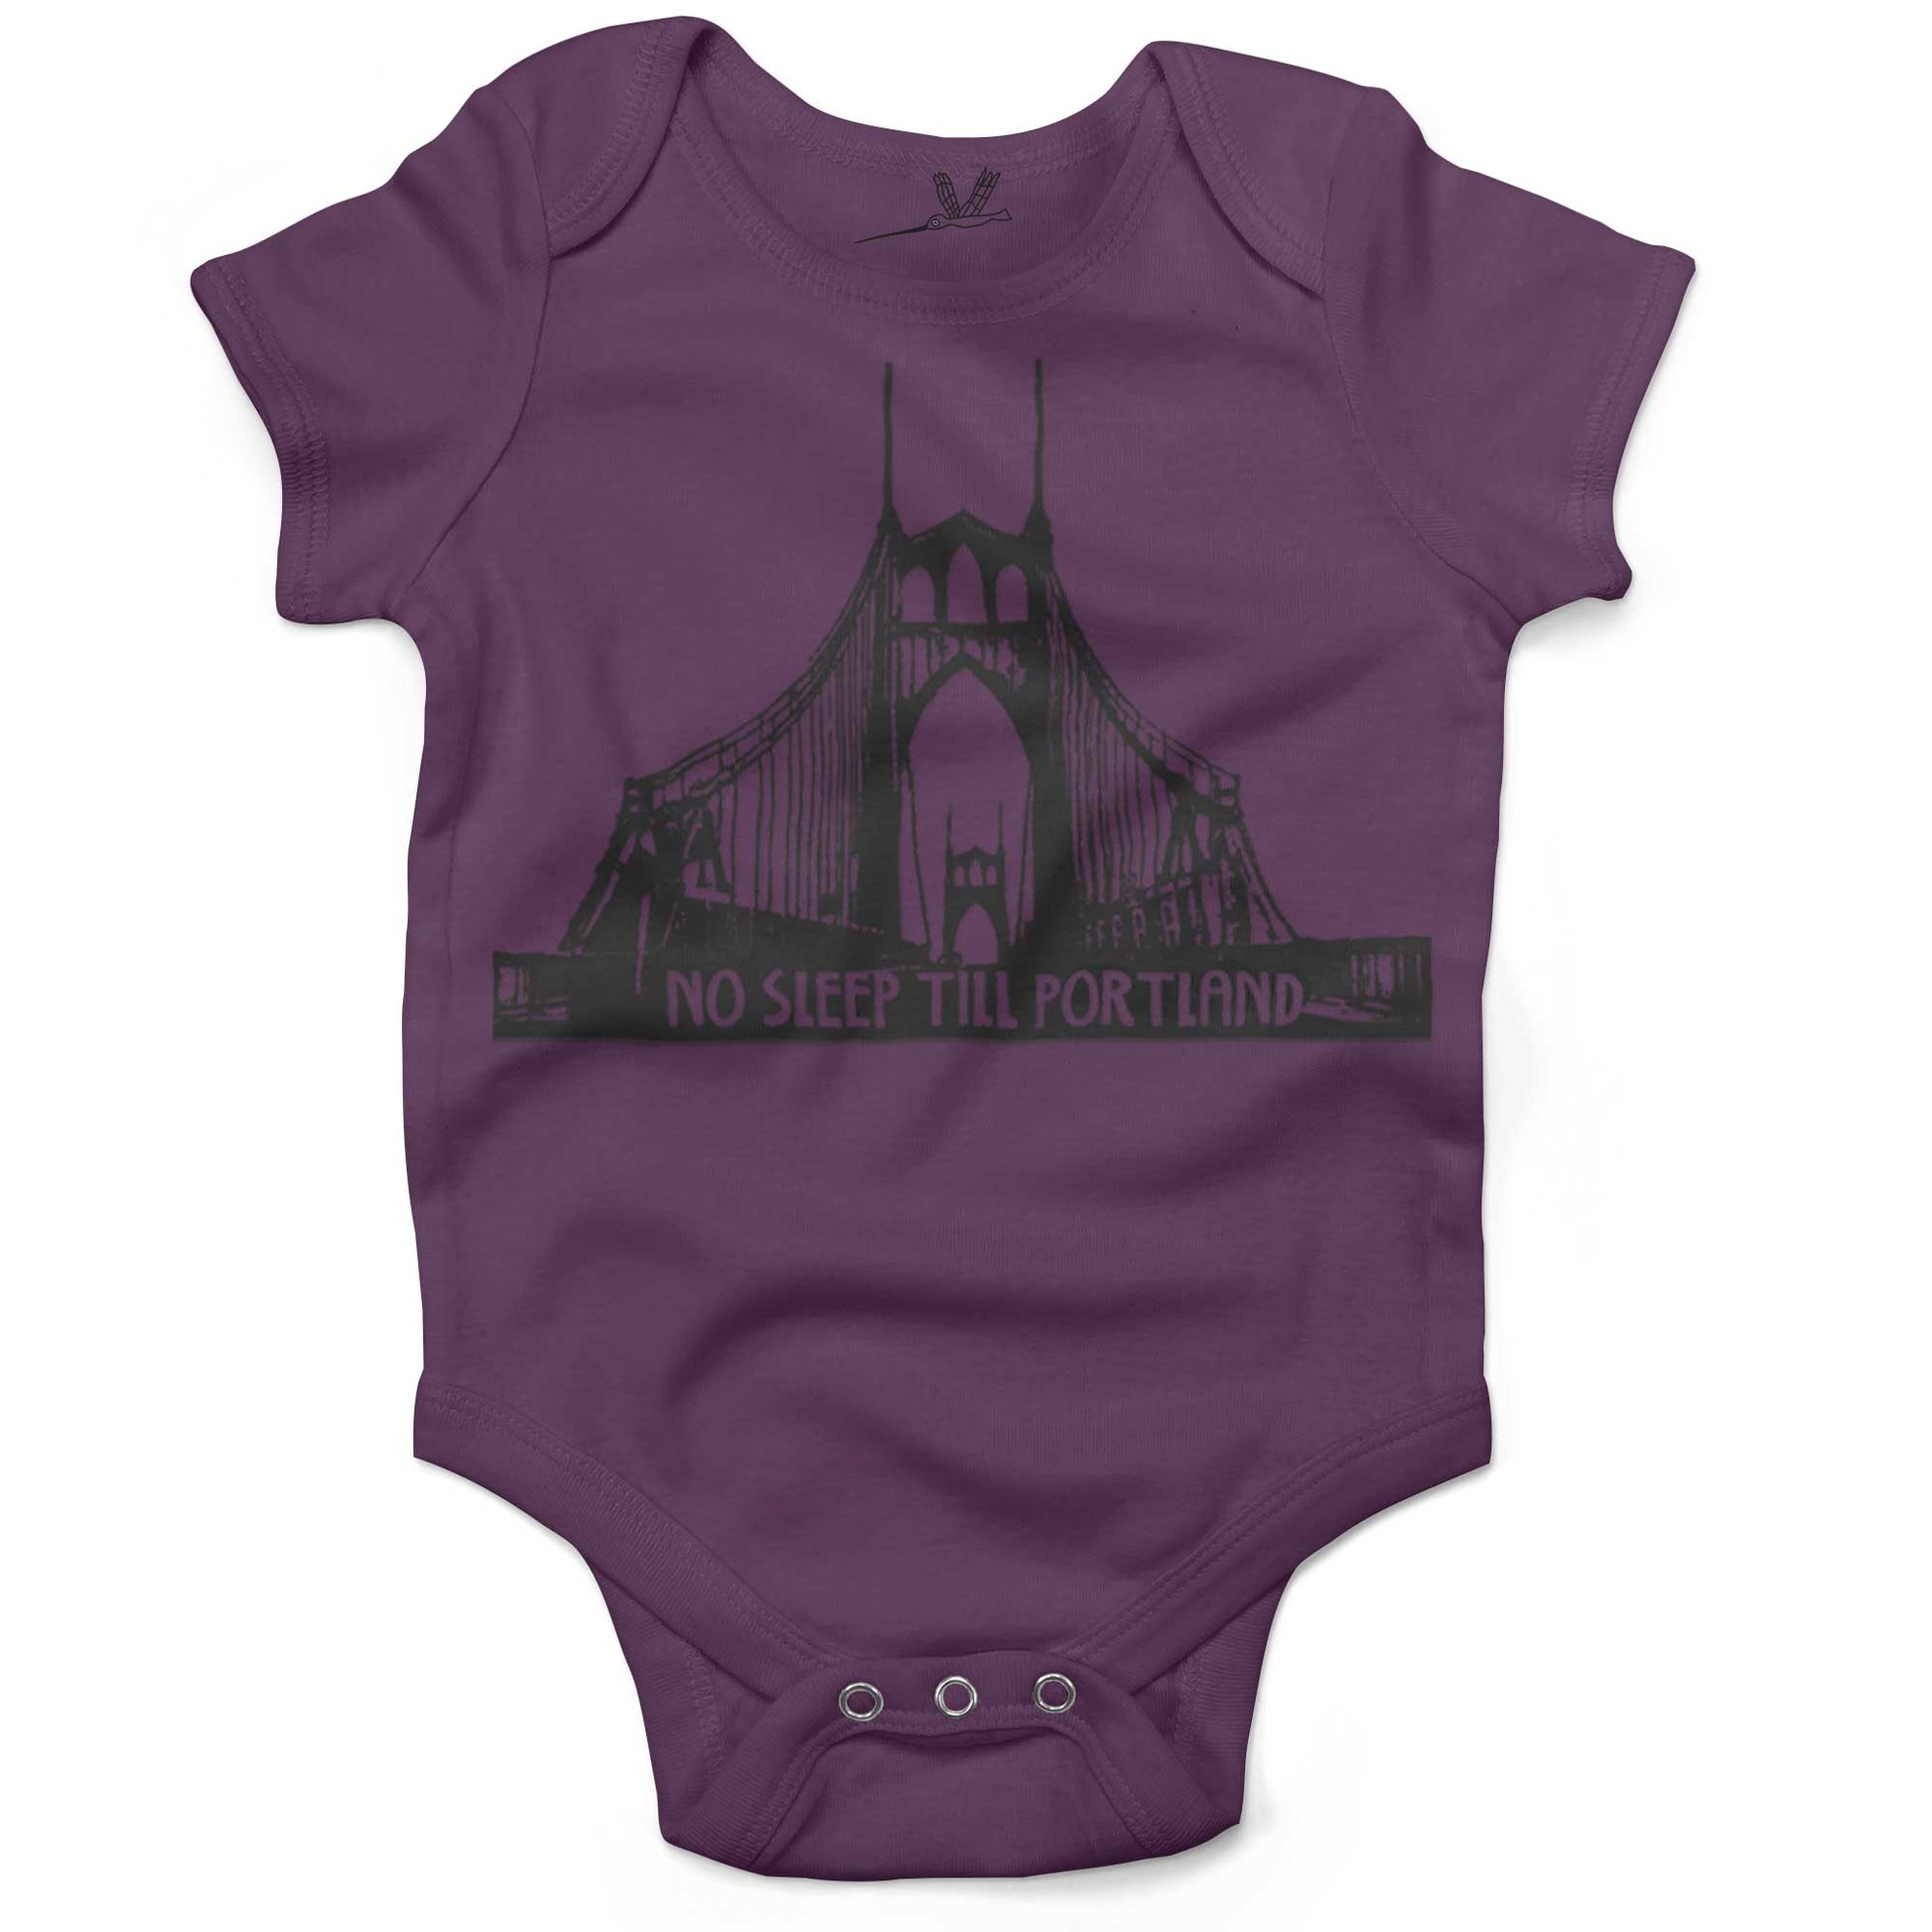 No Sleep Till Portland Infant Bodysuit or Raglan Baby Tee-Organic Purple-3-6 months